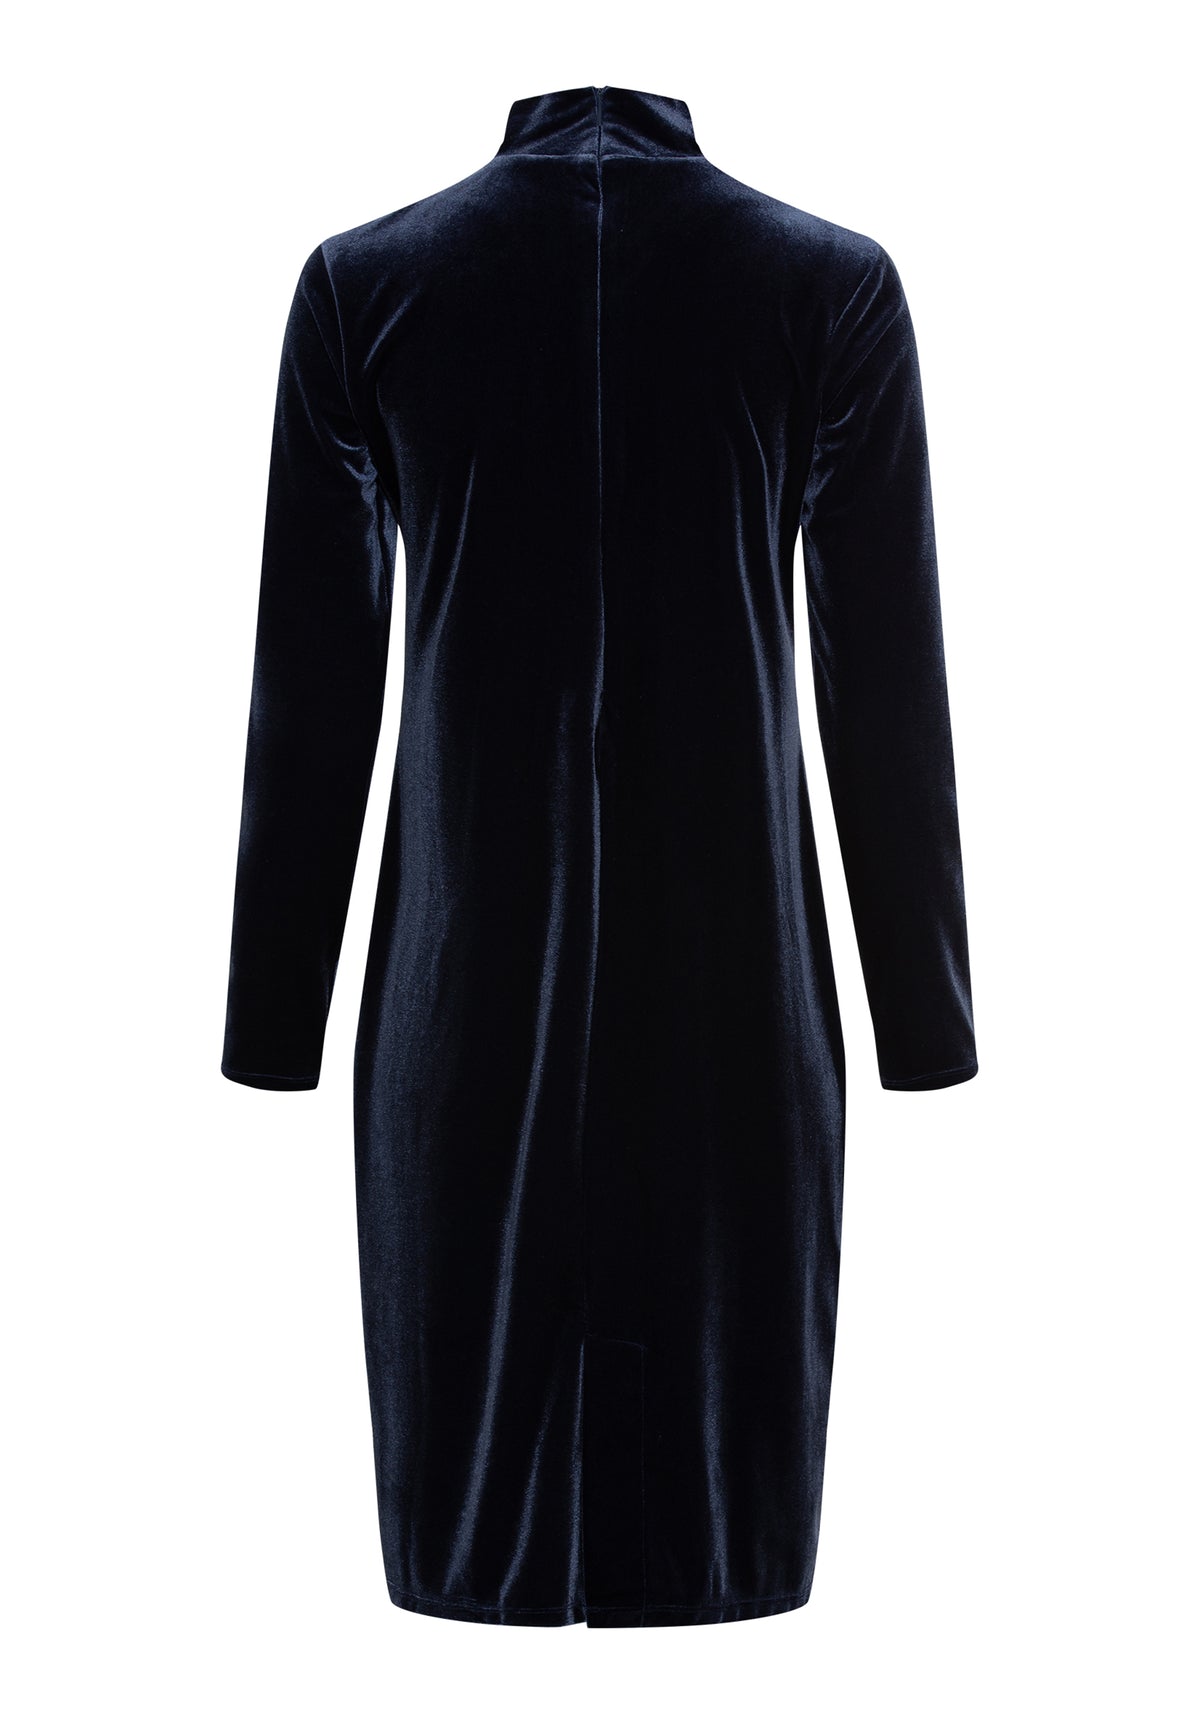 Long Sleeve Velvet Dress with Cutout Neckline